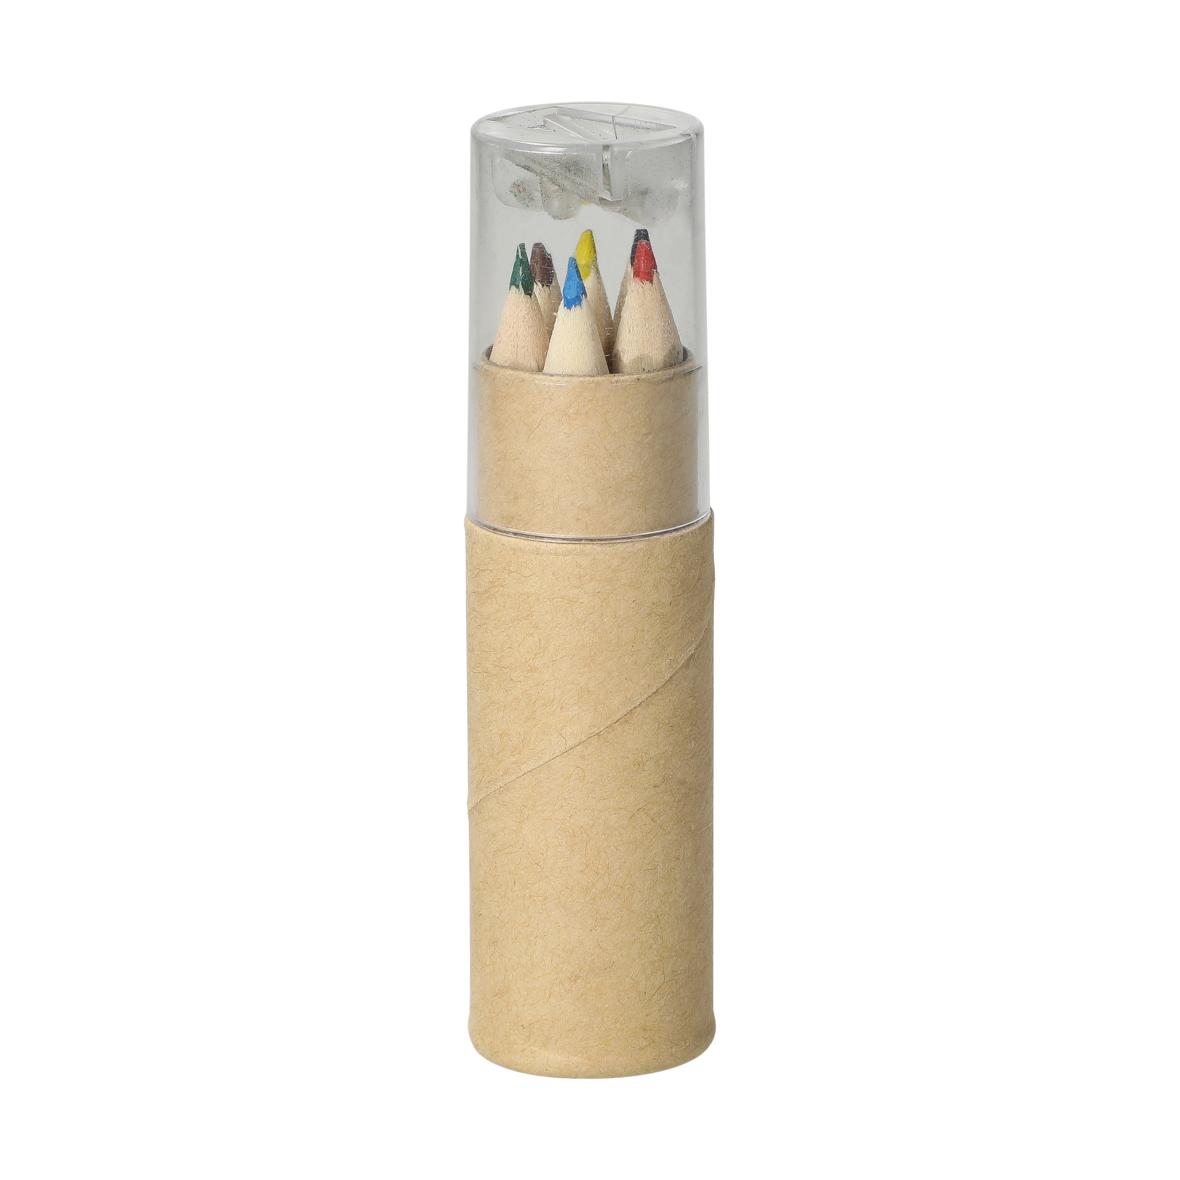 Set of 6 Pencil Sharpeners - Portswood